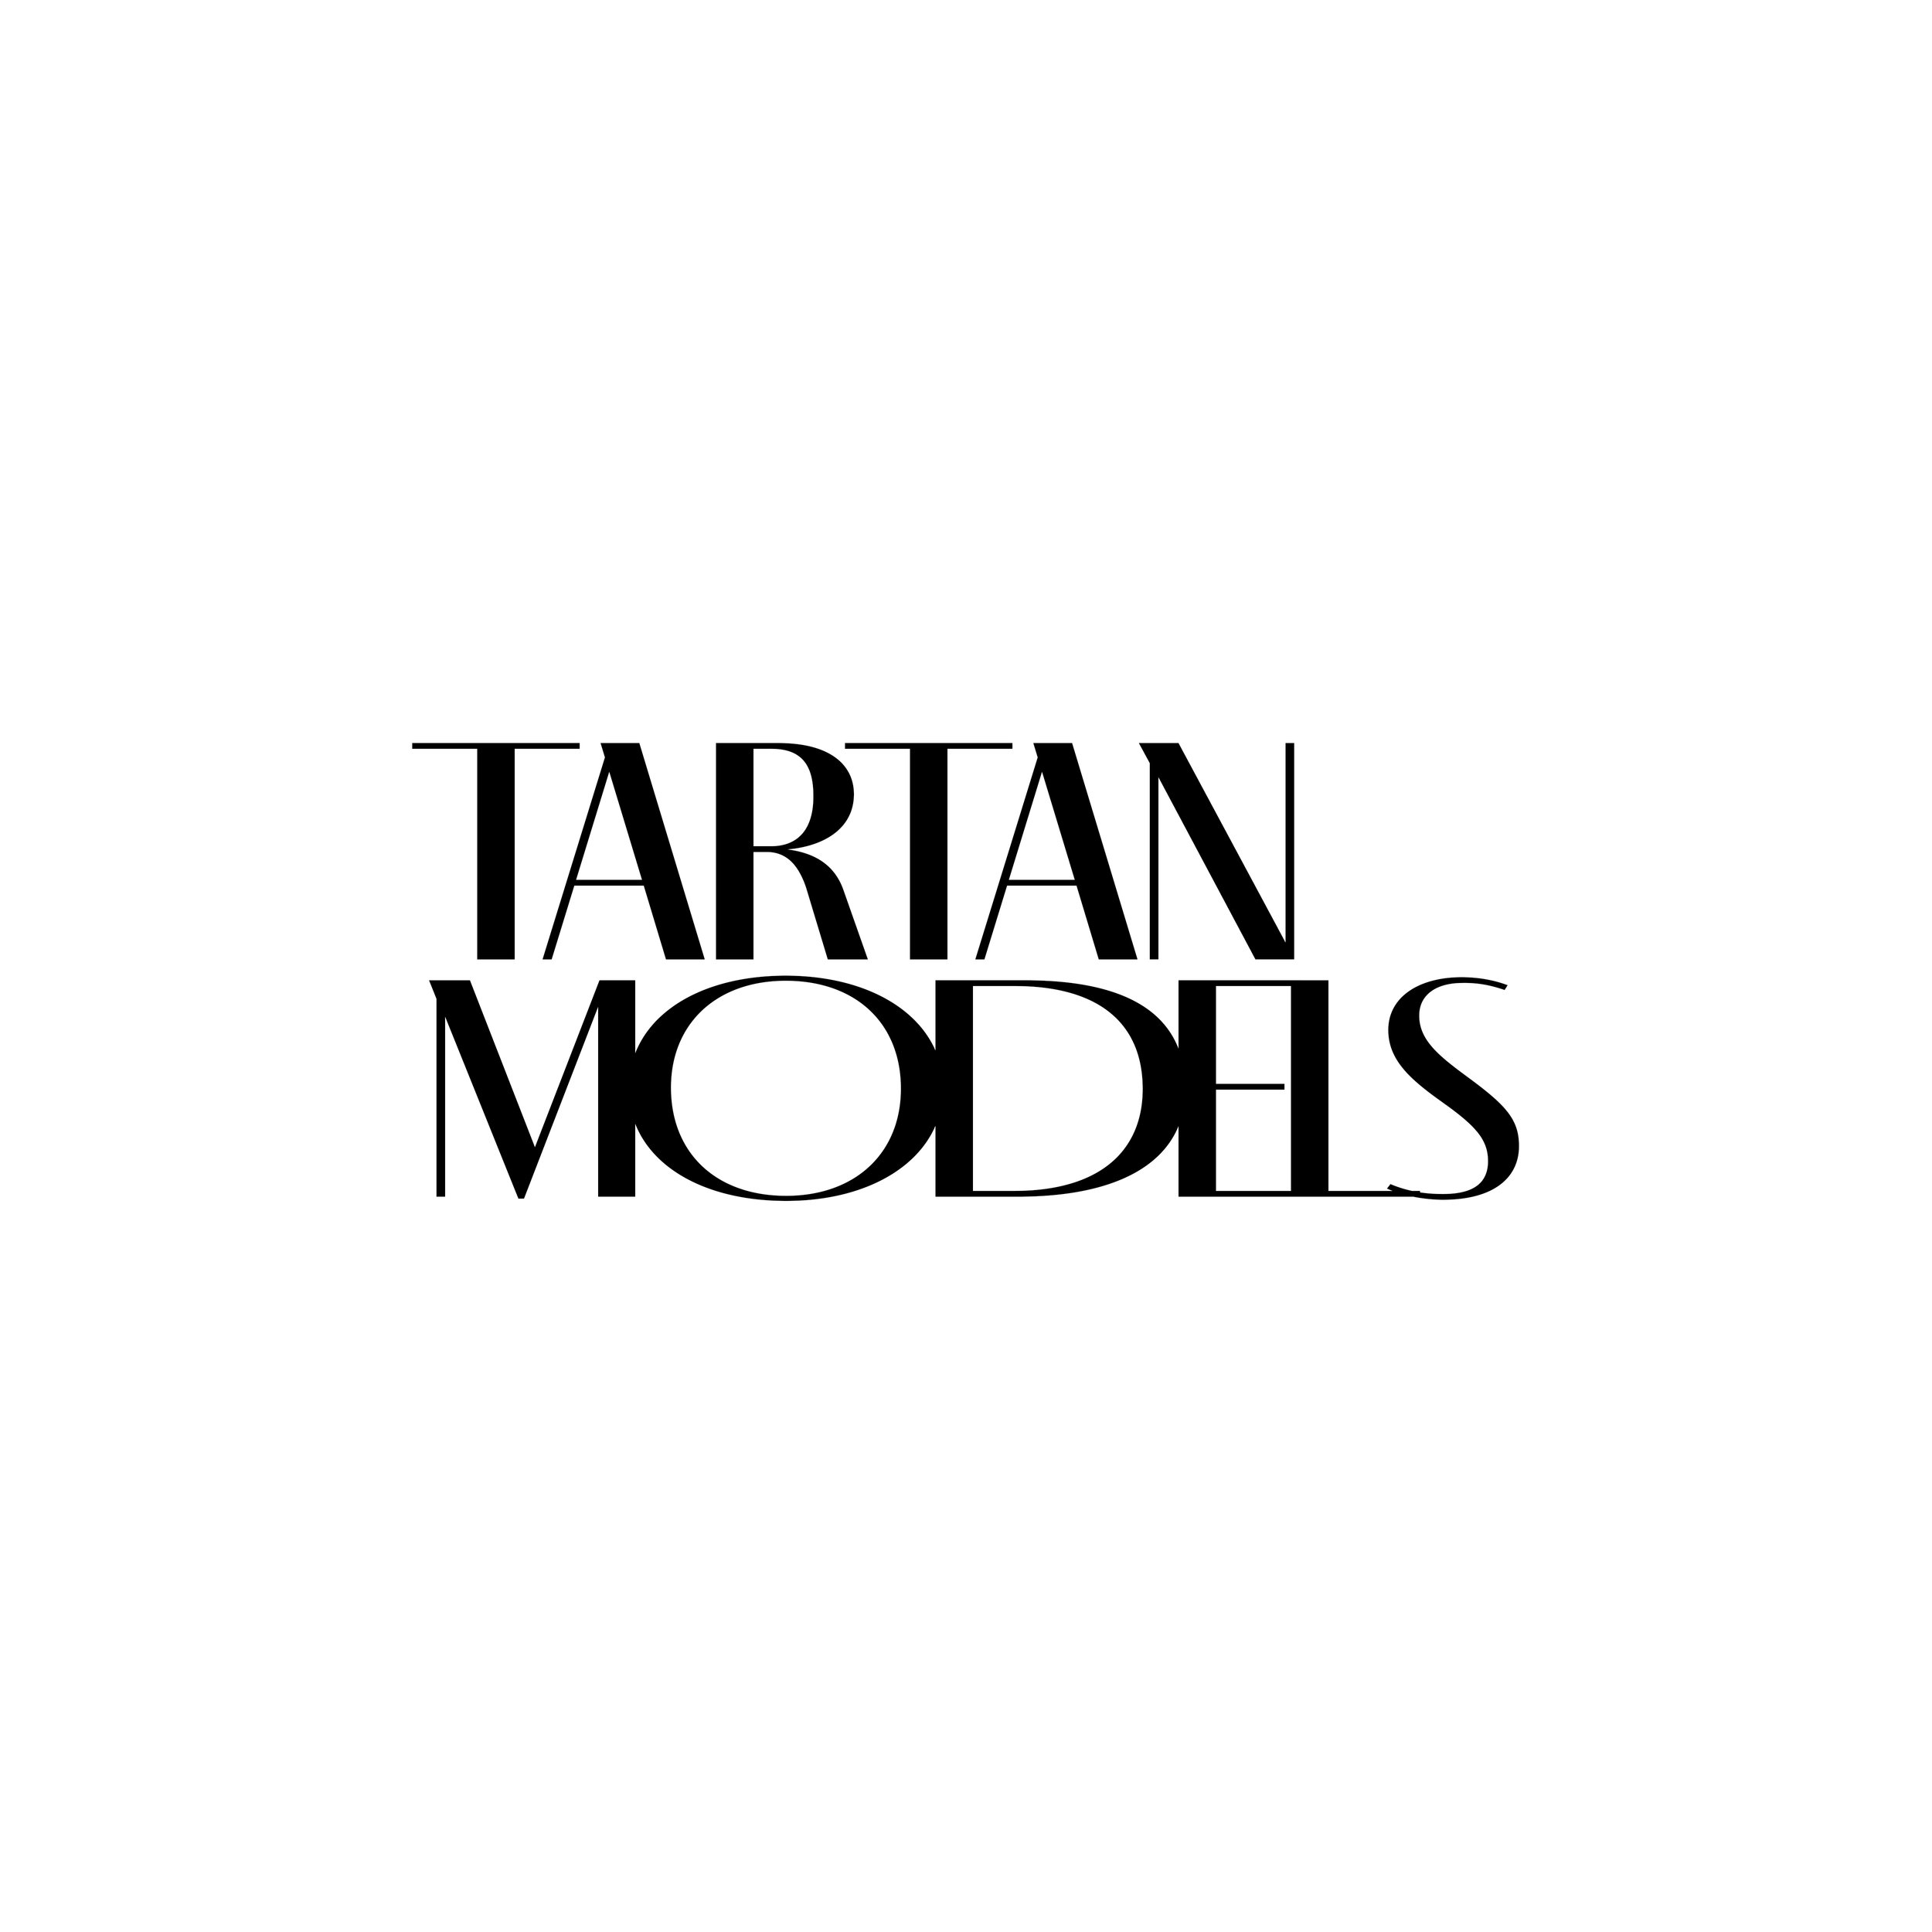 Tartan Models, UK Model Management Agency in Edinburgh, Manchester, Glasgow and London